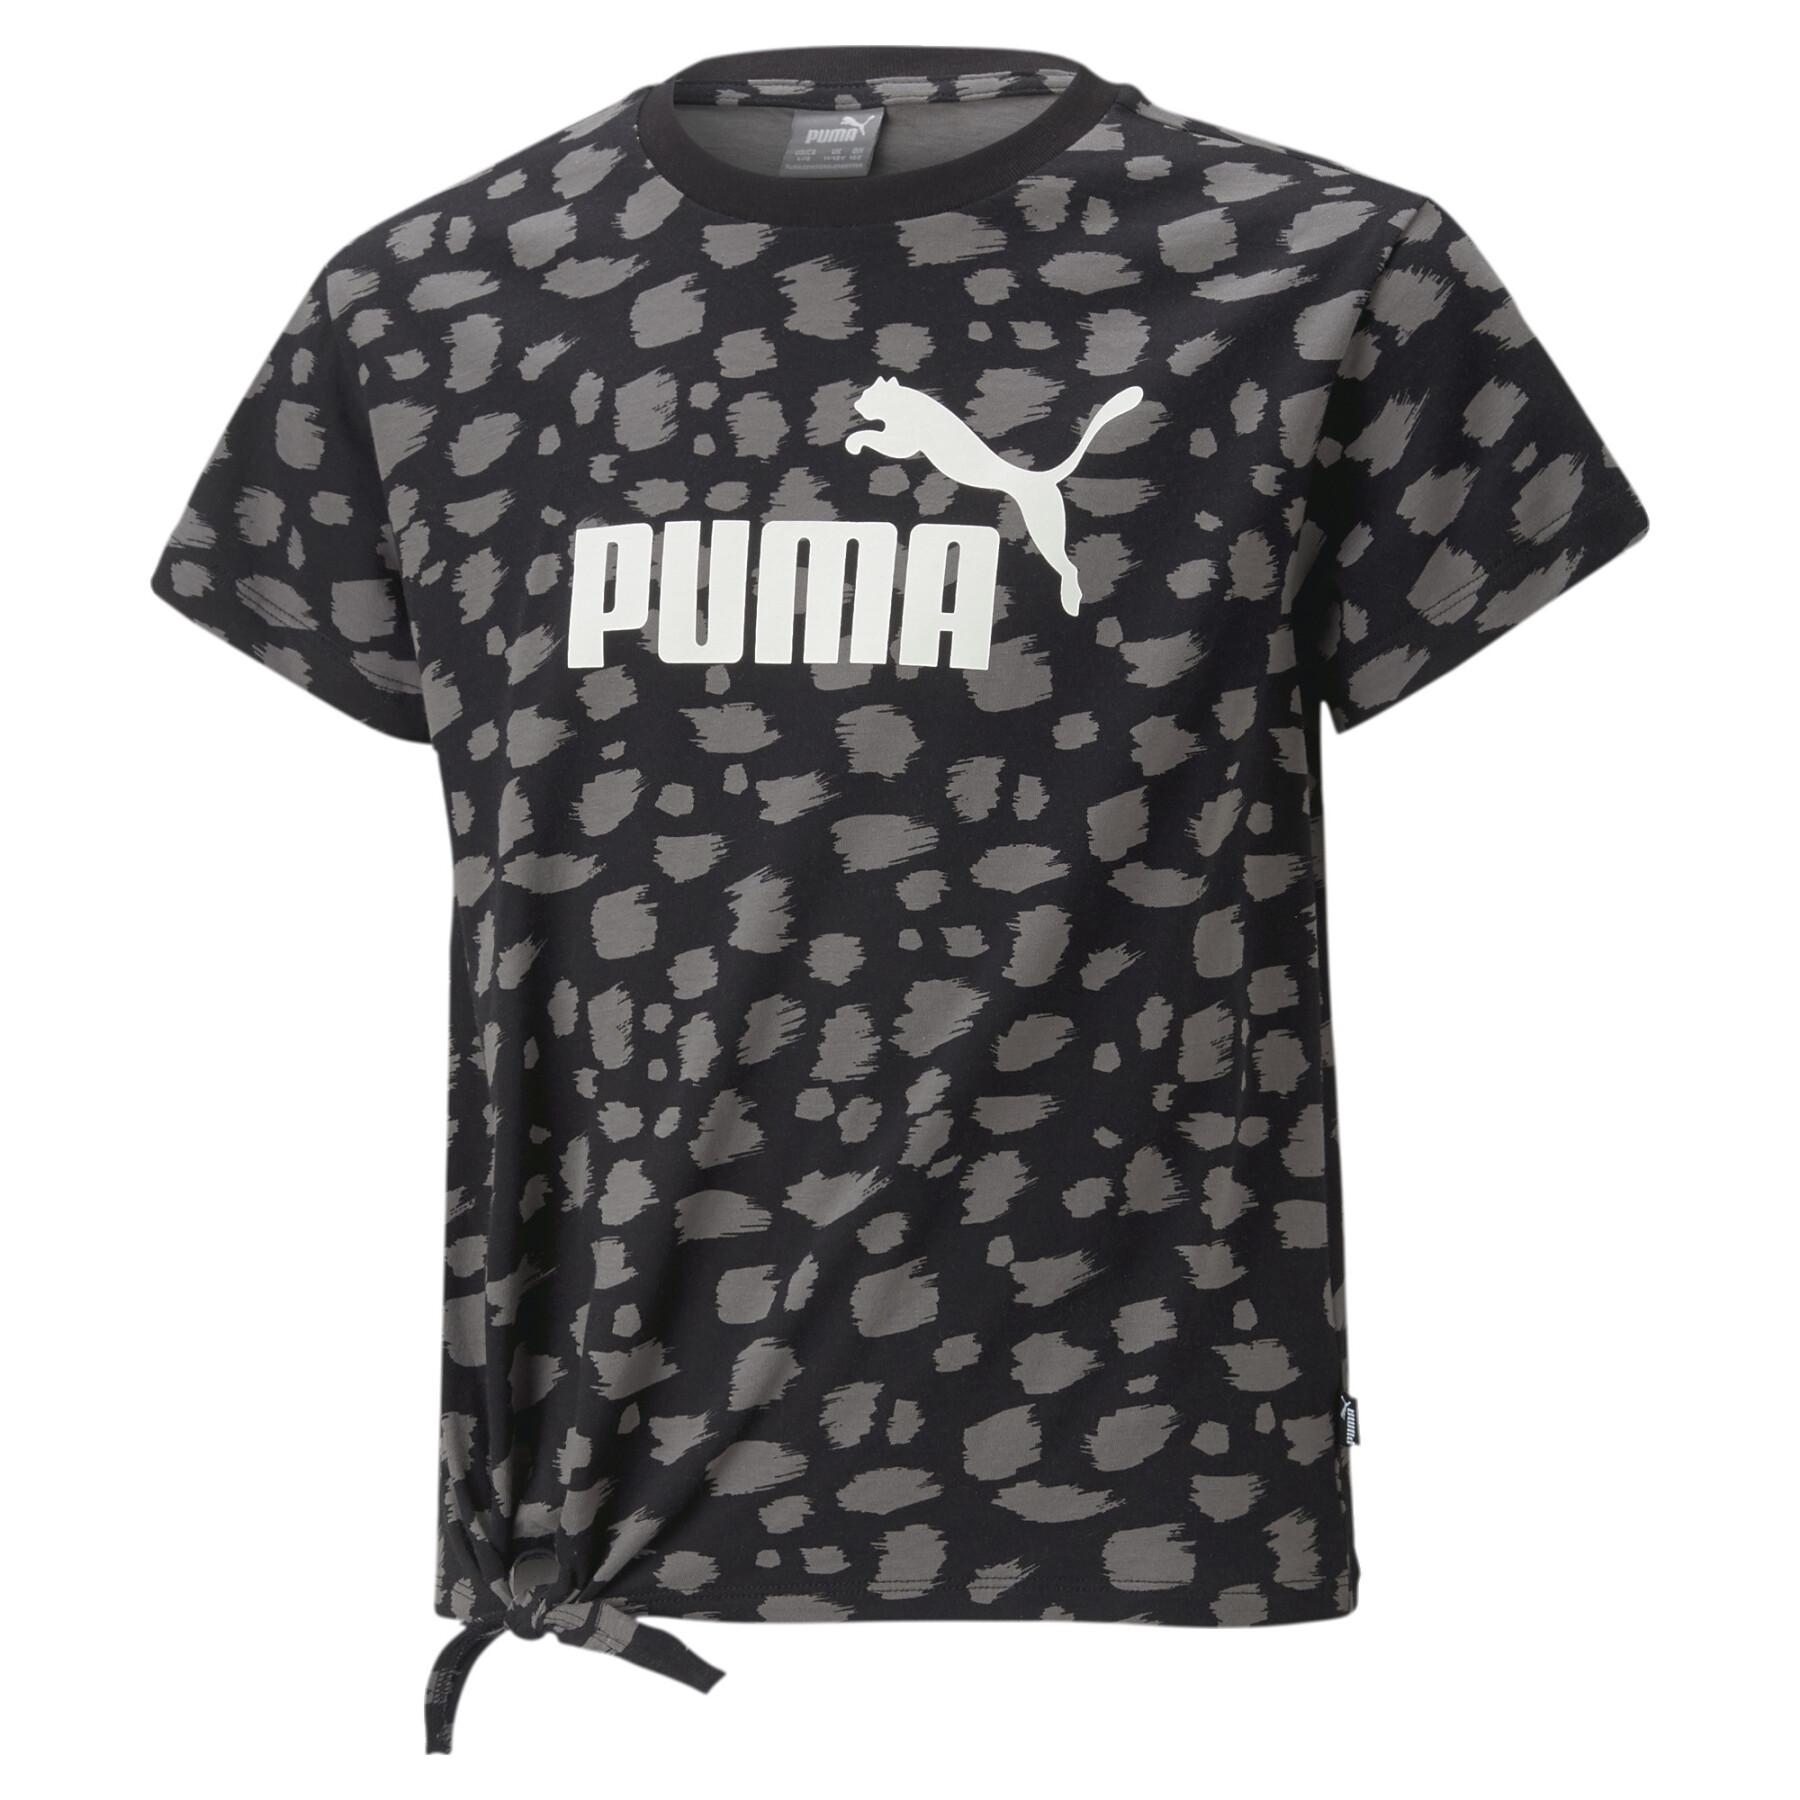 Girl's knotted animal print t-shirt Puma ESS+ AOP